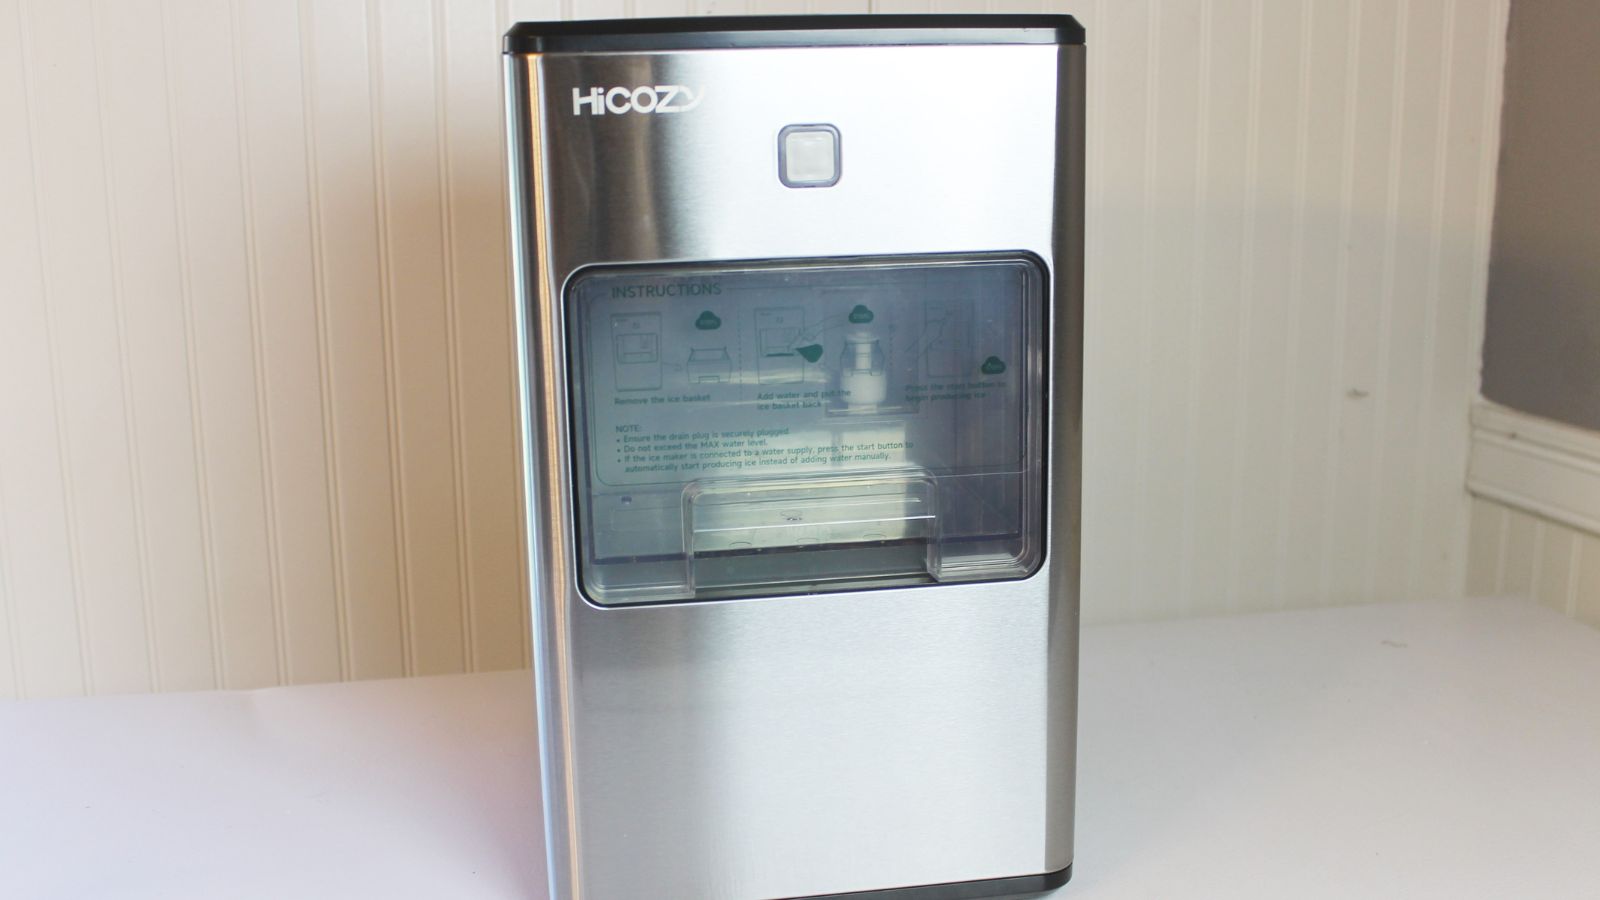  HiCOZY Dual-Mode Nugget Ice Maker Countertop, Compact